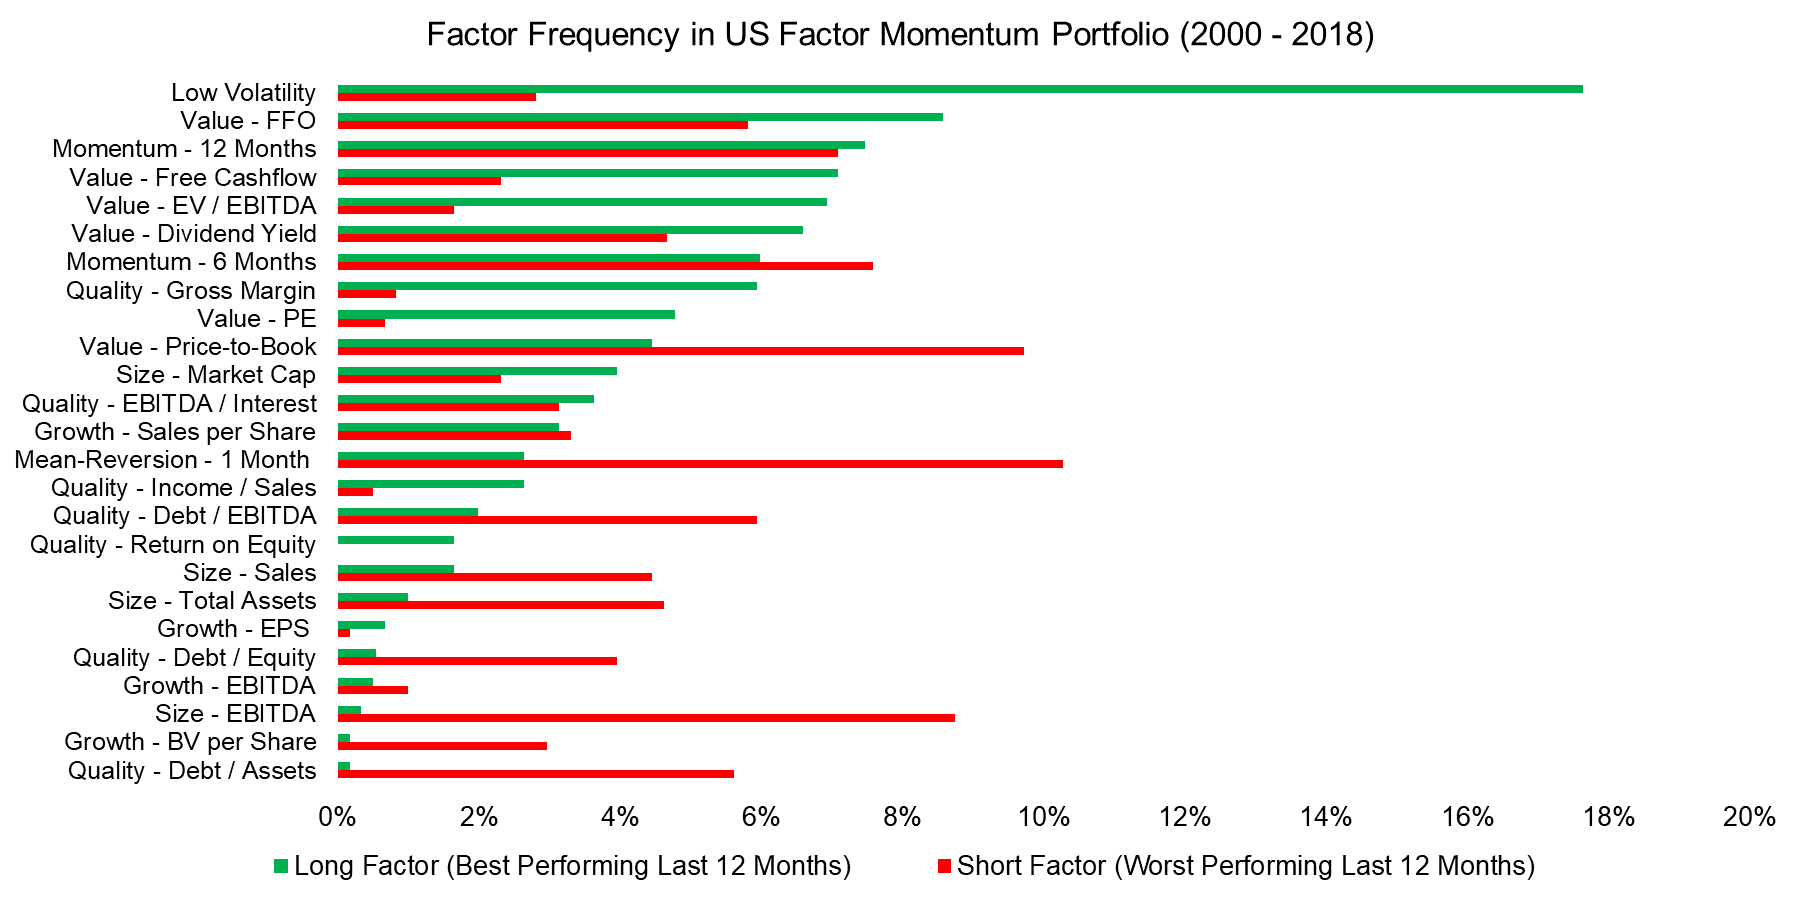 Factor Frequency in US Factor Momentum Portfolio (2000 - 2018)